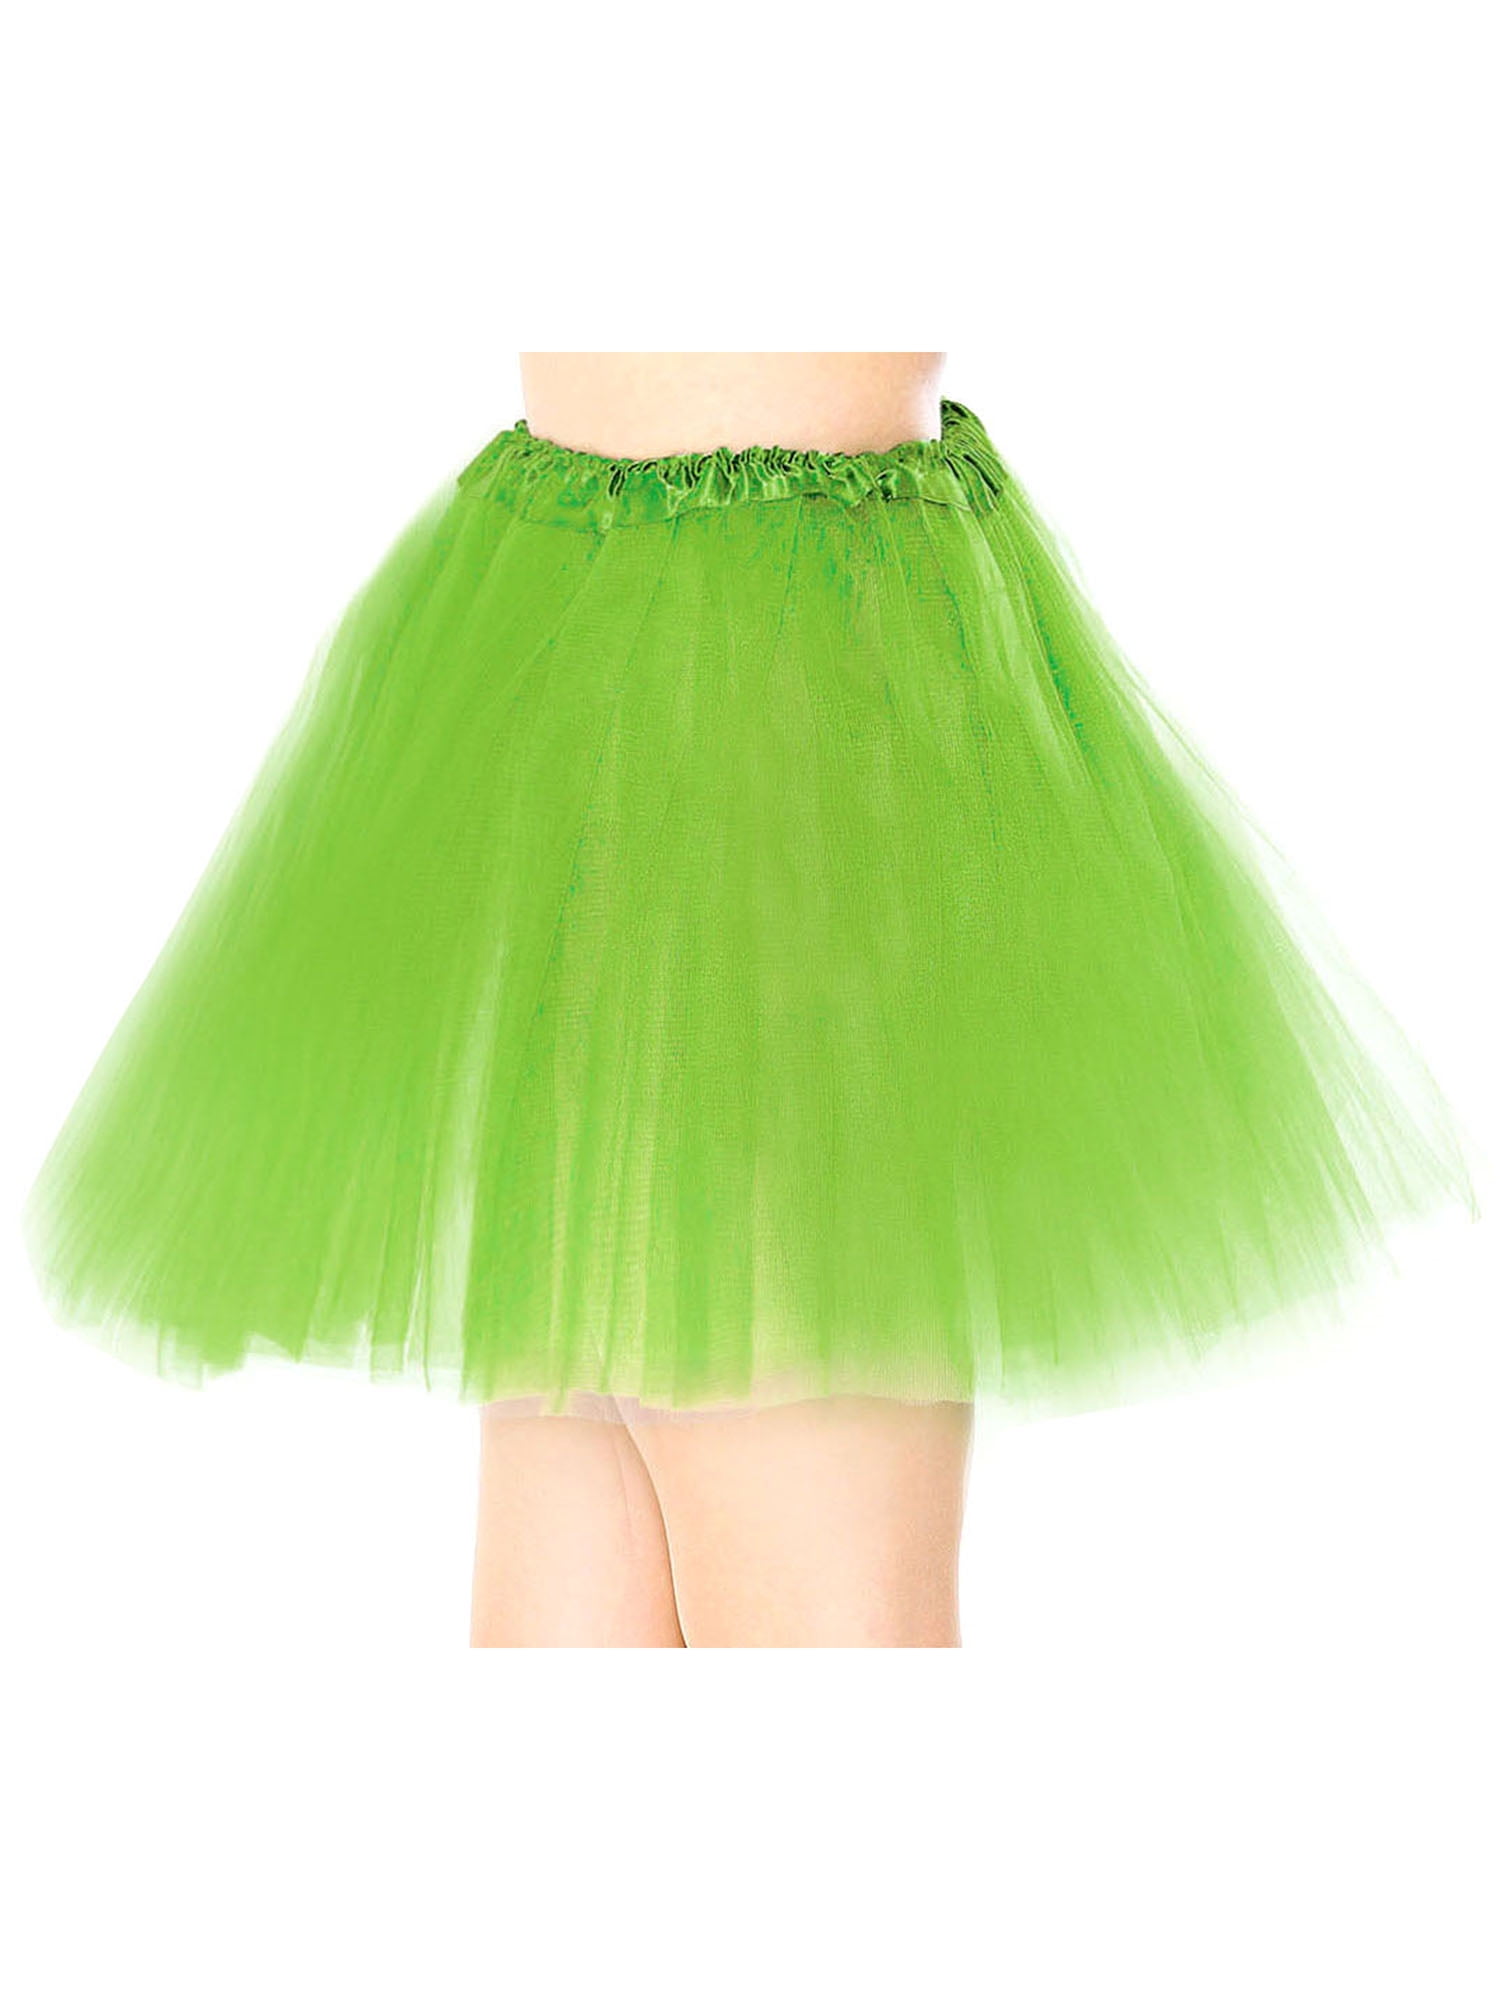 Taigood Girls Tulle Tutu Skirt Petticoat Ballet Dancing Skirt for Halloween Party Dress Up Costume Fancy Dress Party 